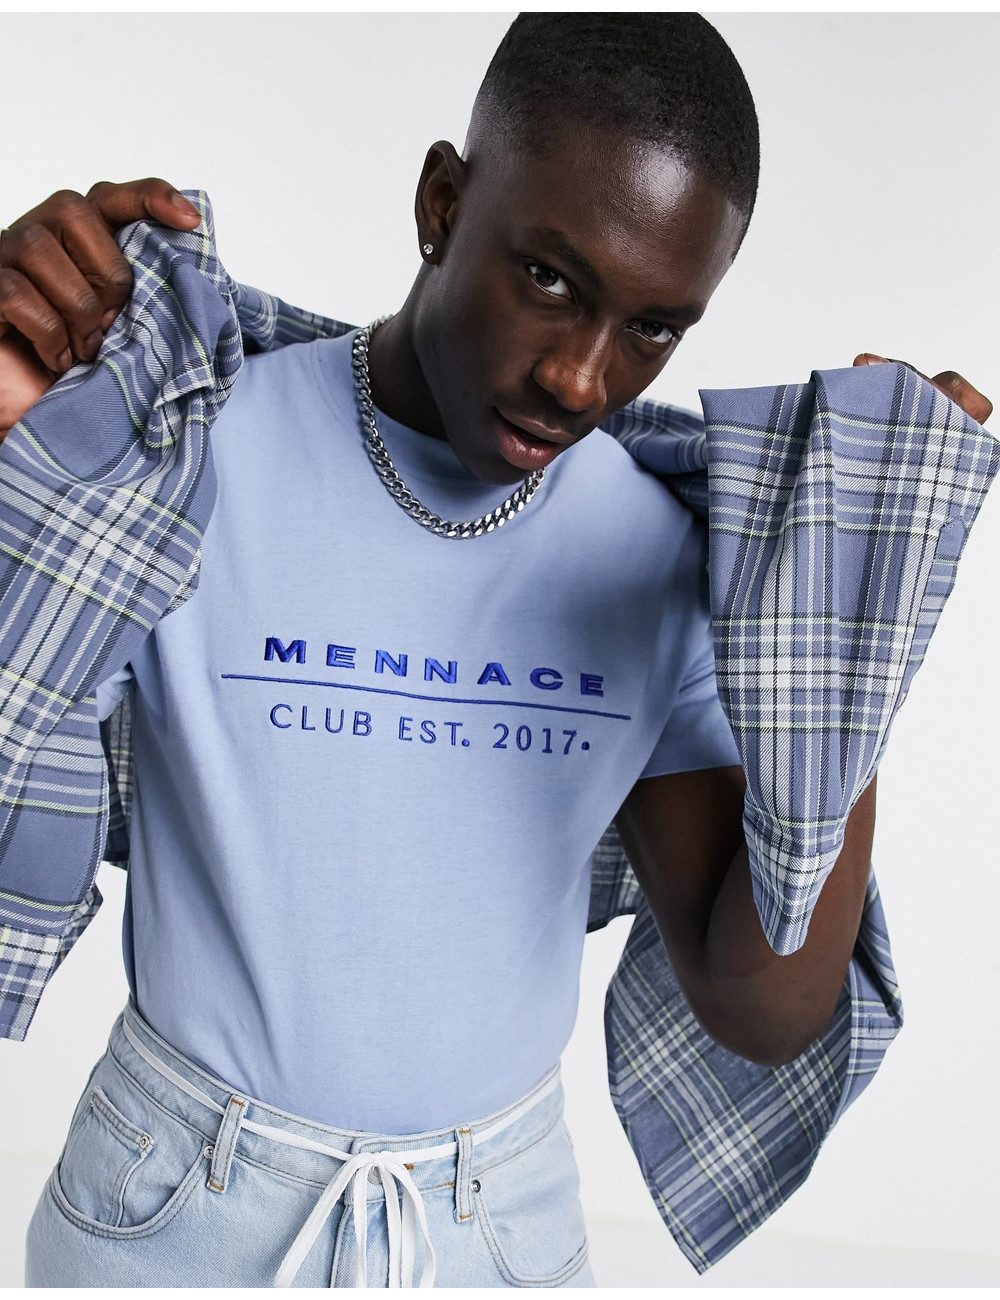 Mennace club est t-shirt in...